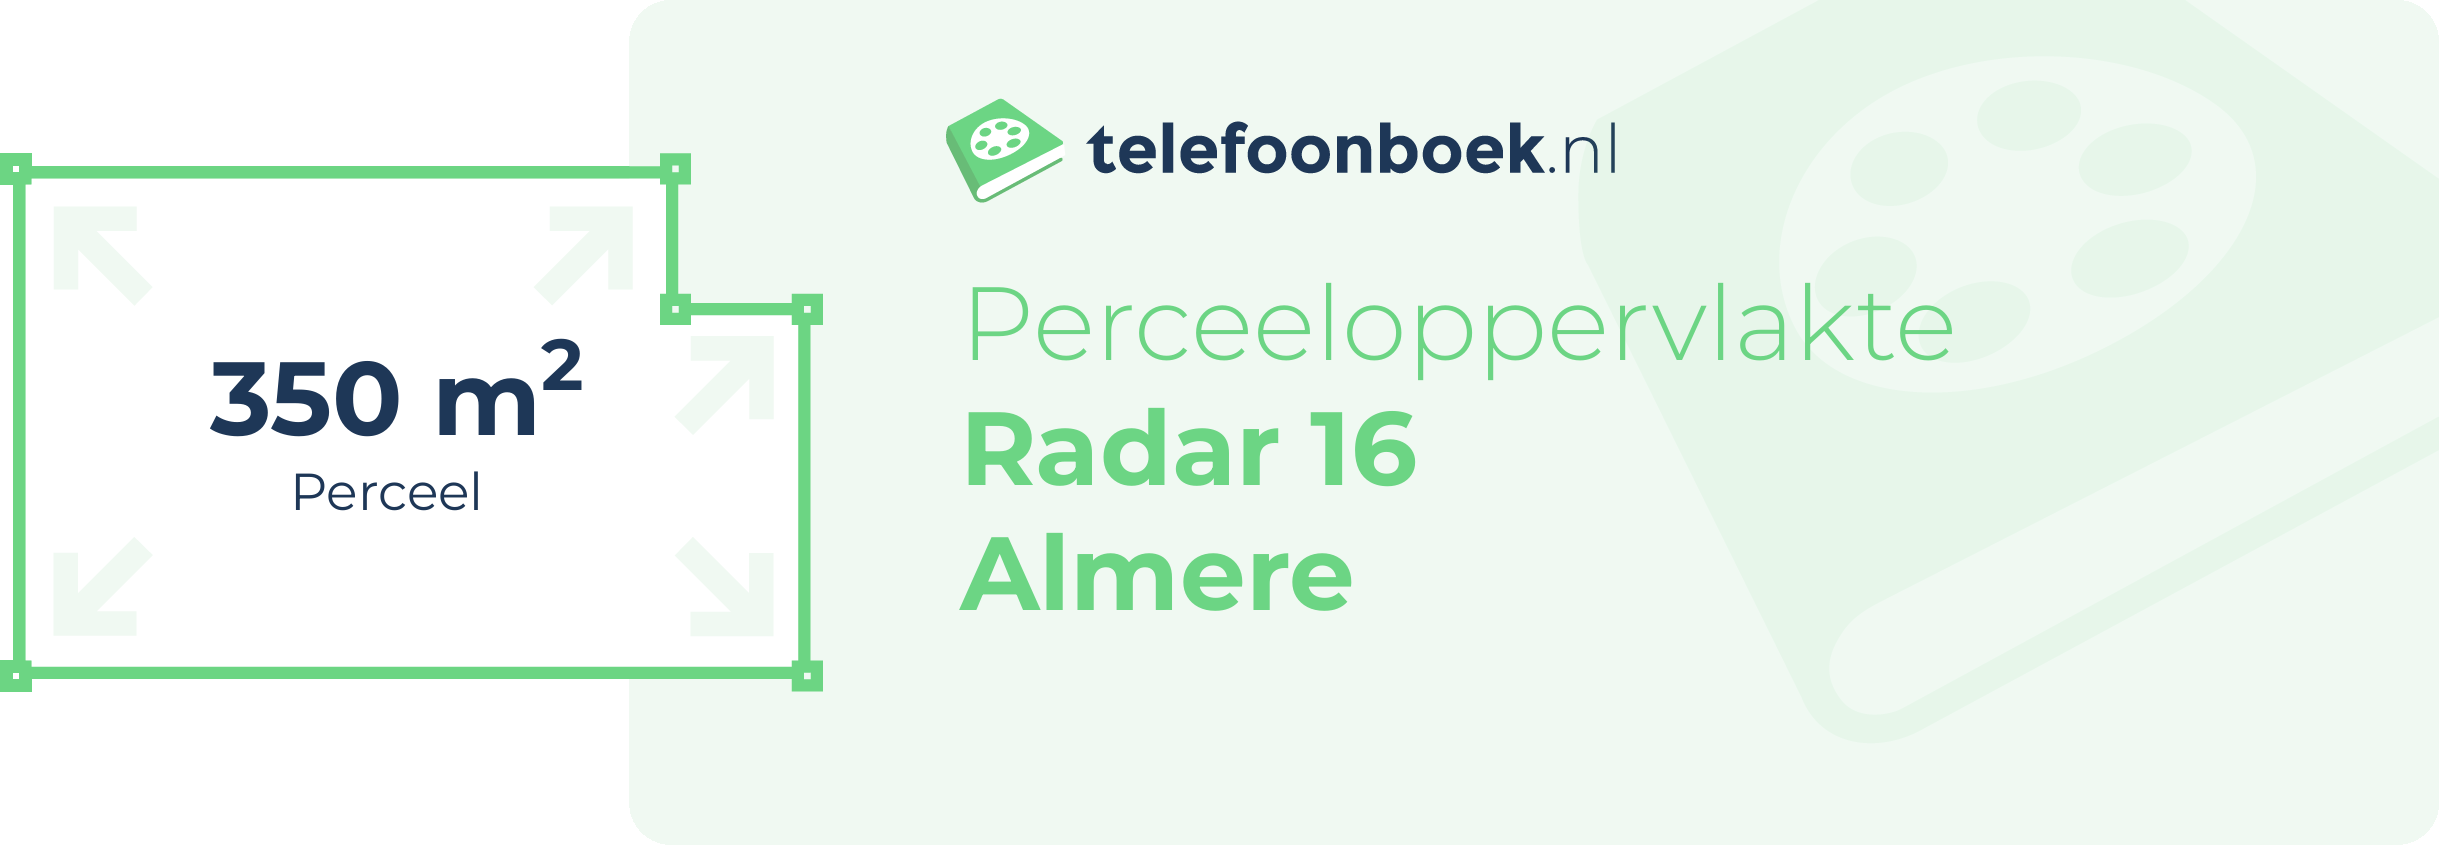 Perceeloppervlakte Radar 16 Almere